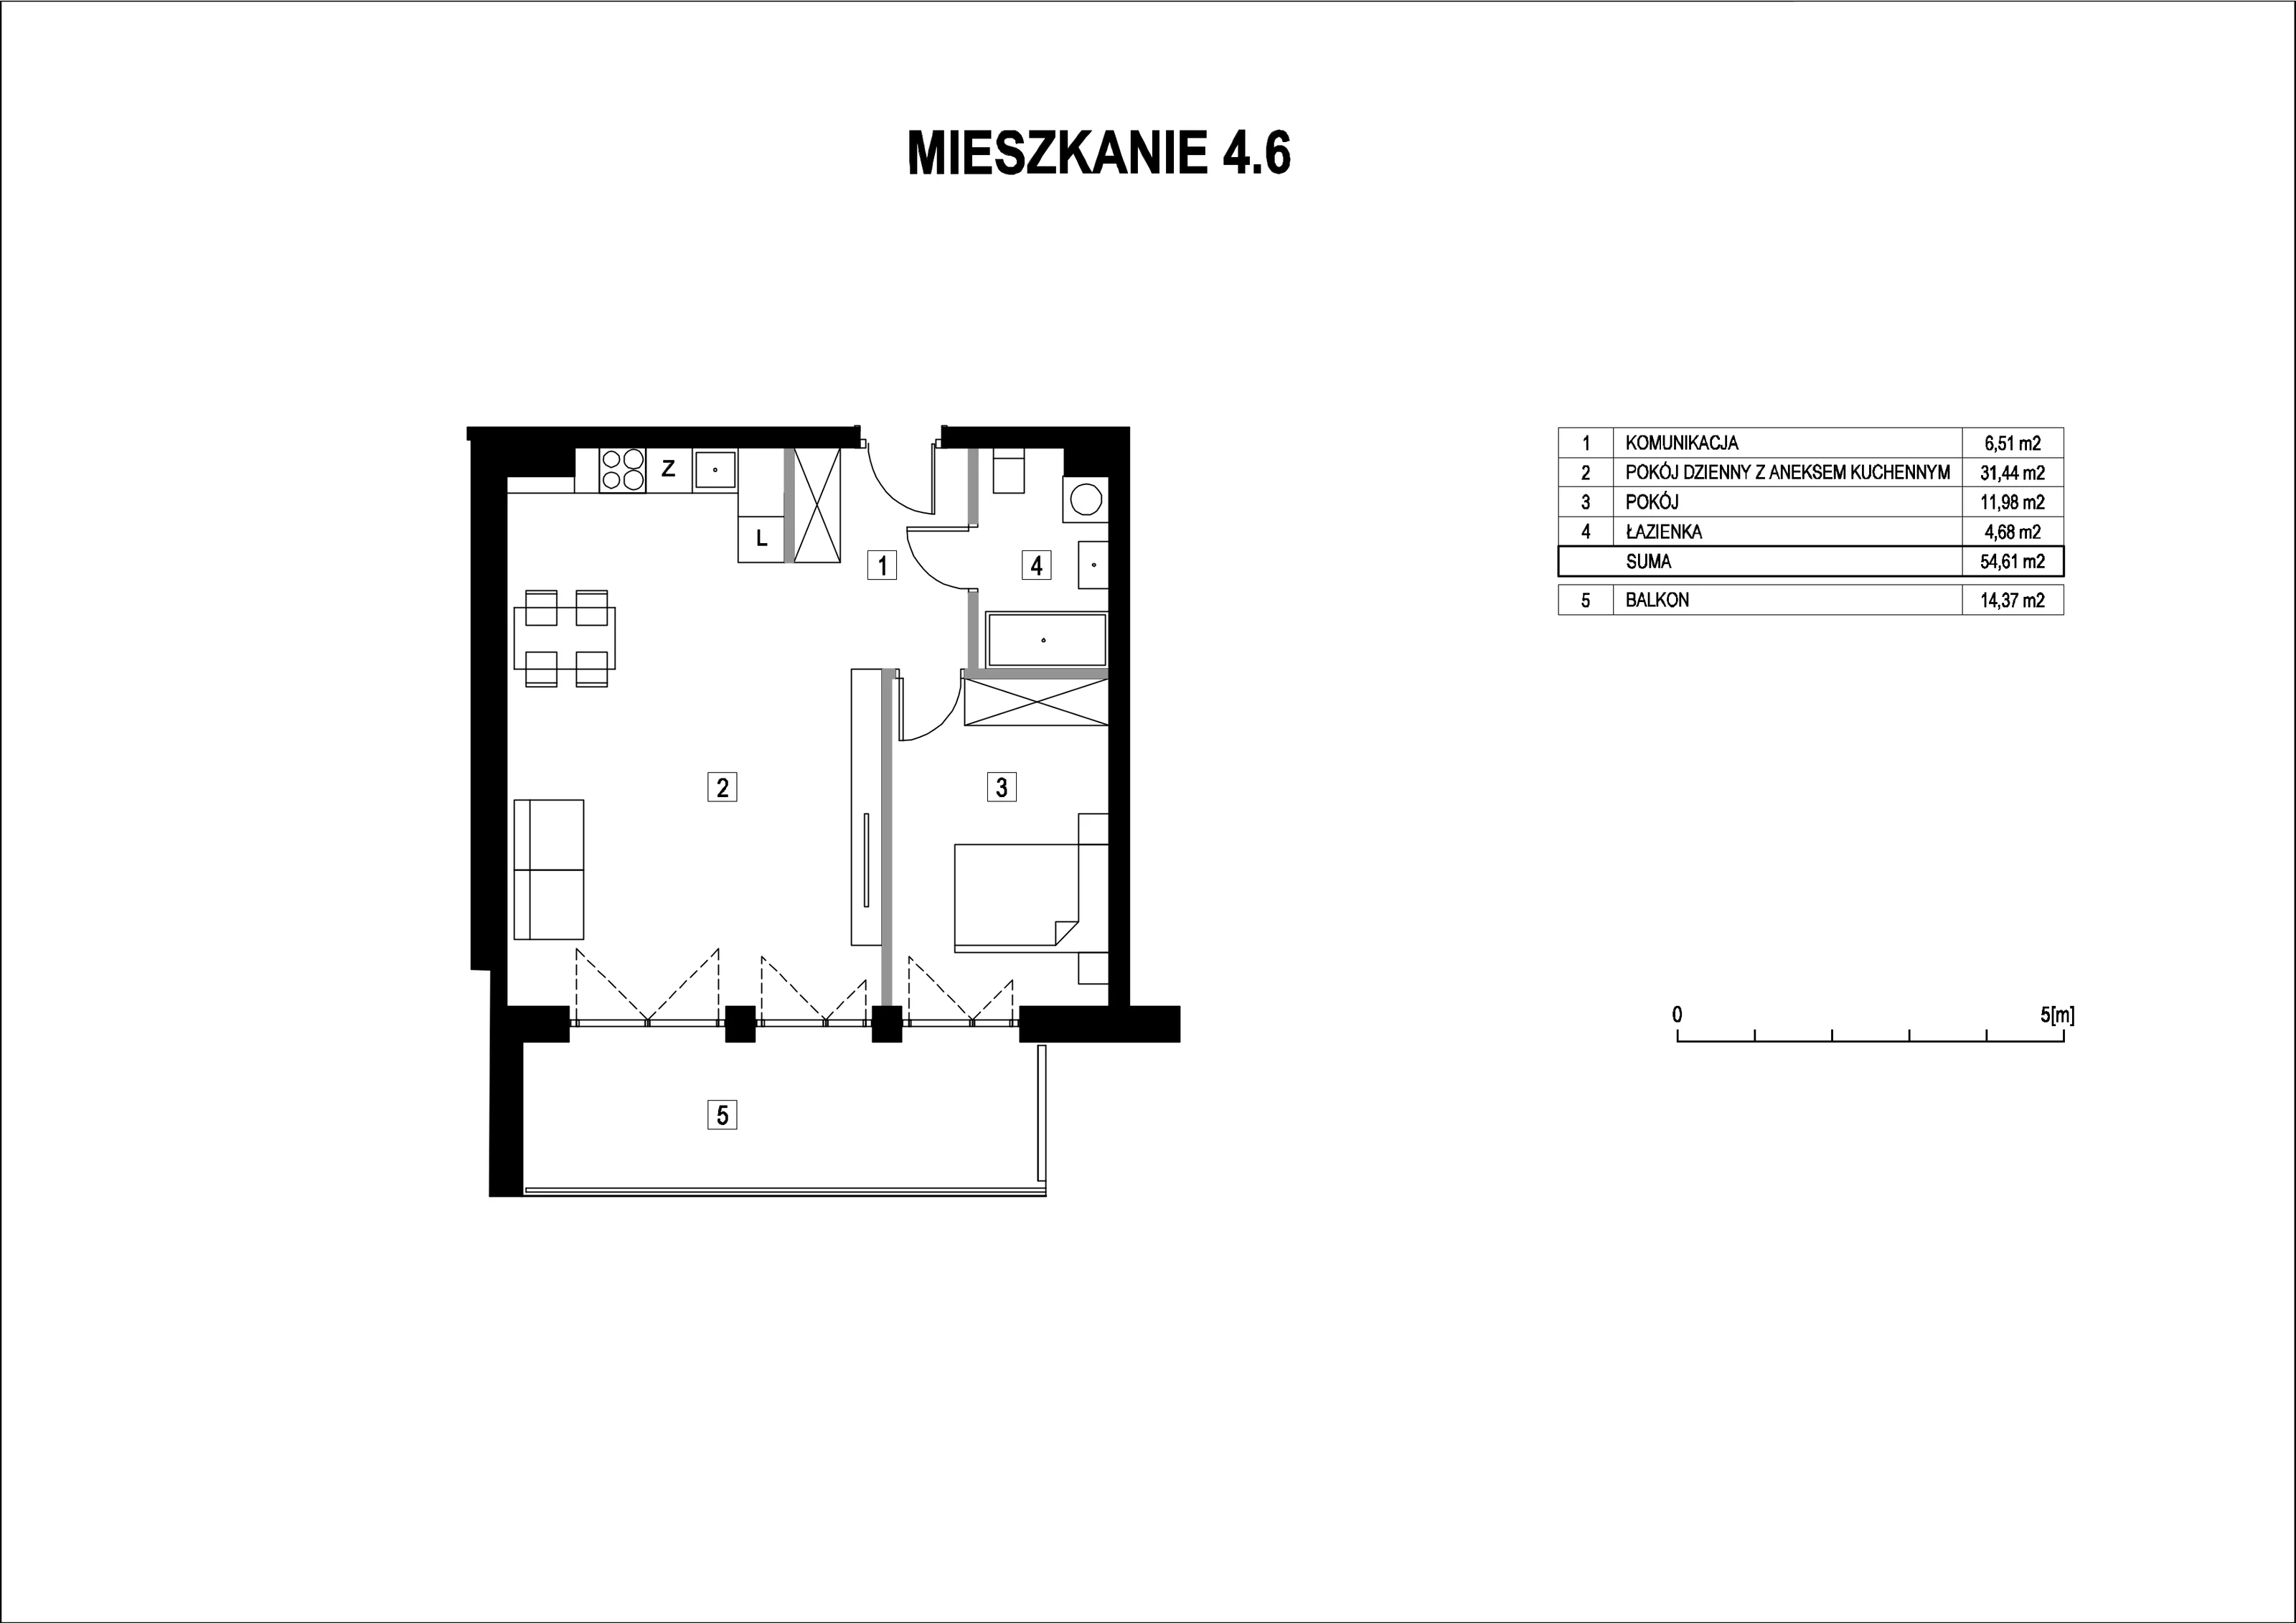 Apartament 54,61 m², piętro 4, oferta nr M4_6, La Vie Art, Łódź, Polesie, ul. 6 Sierpnia 10